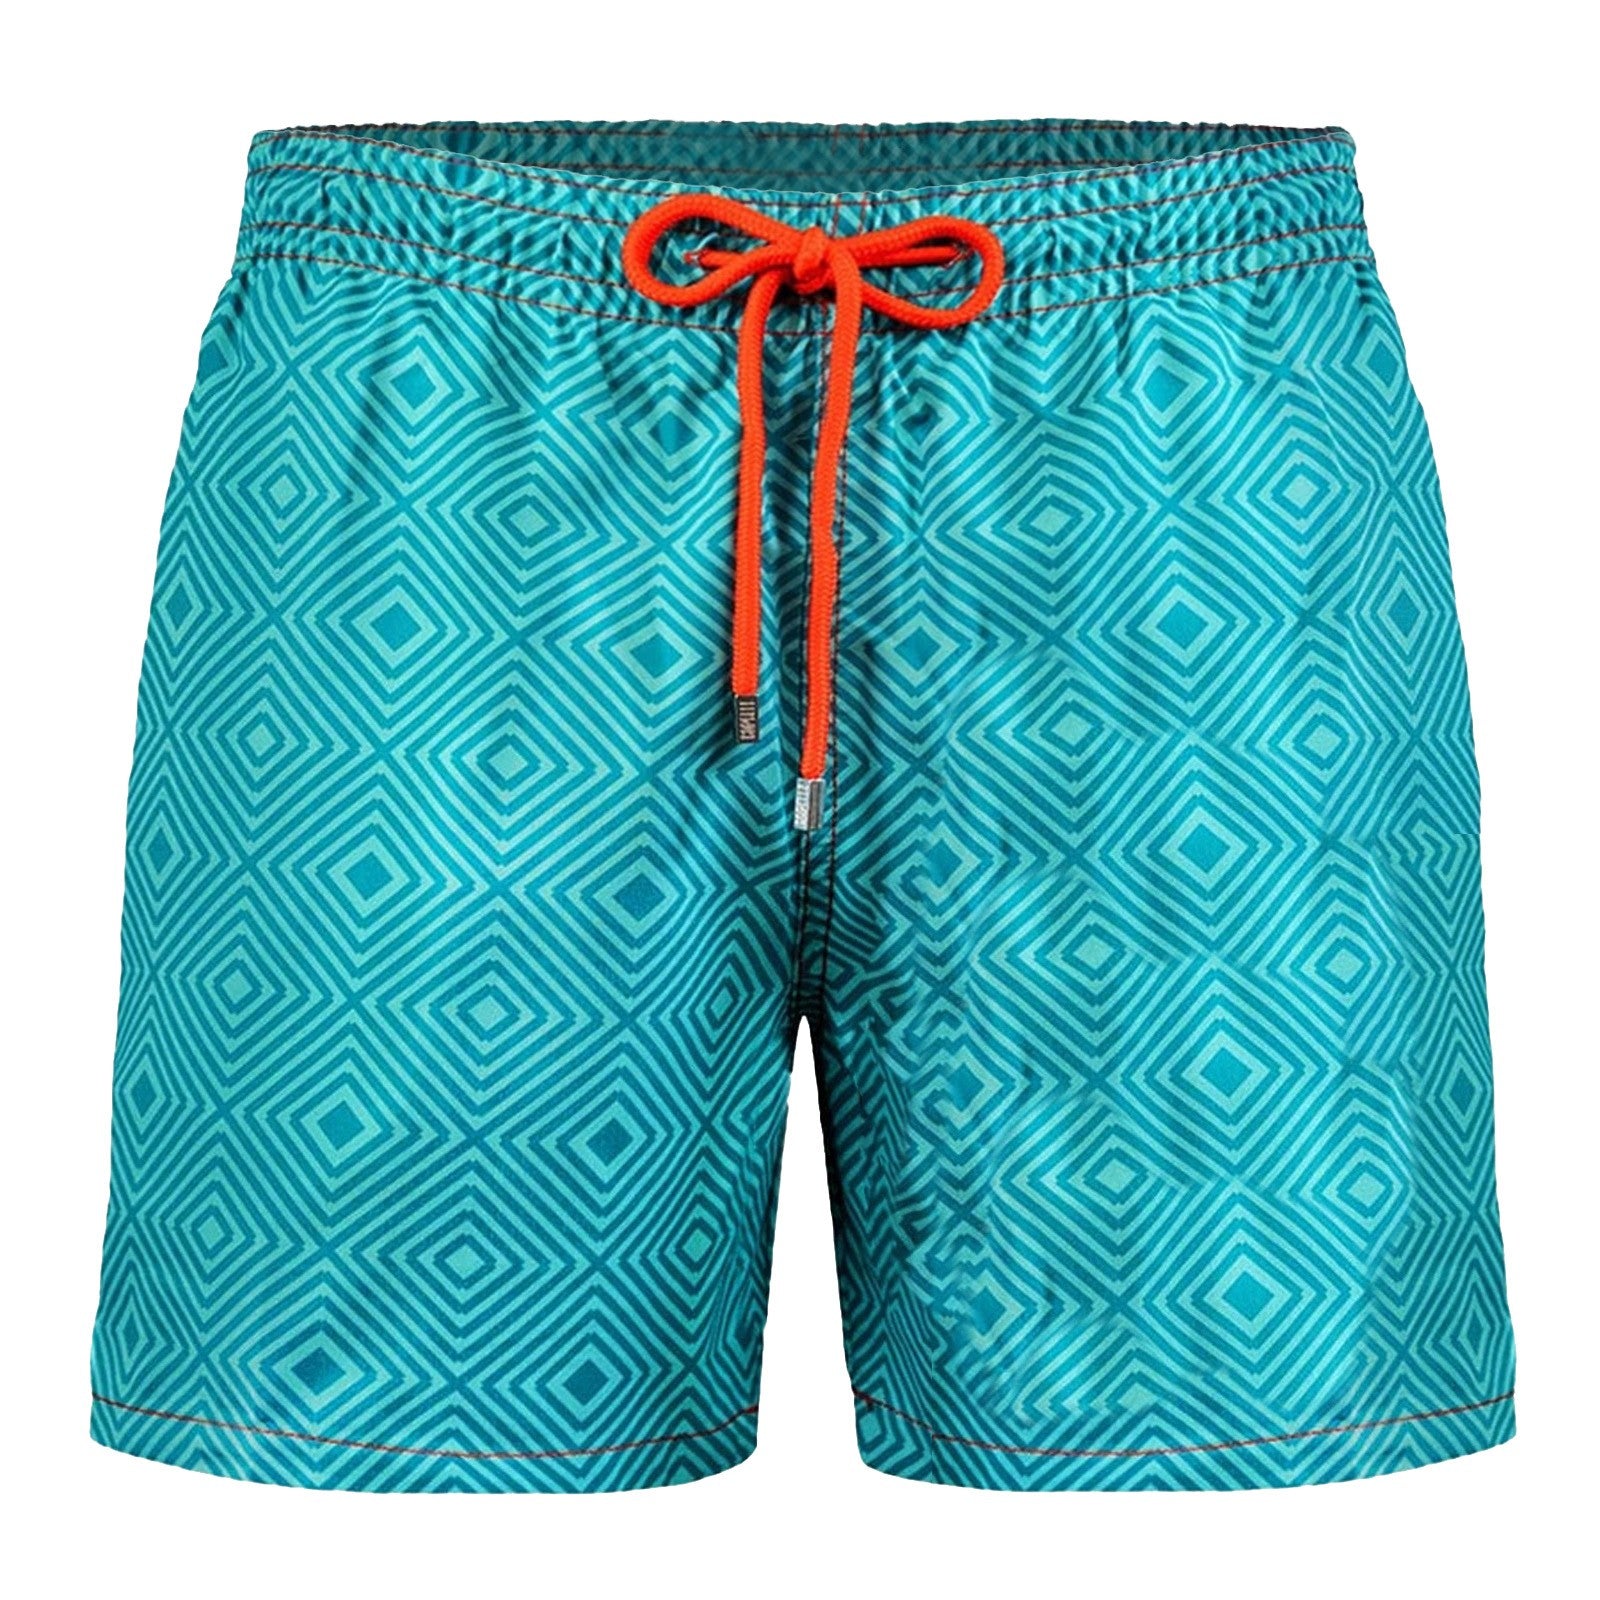 Summer Shorts Men's Beach Sports Pants